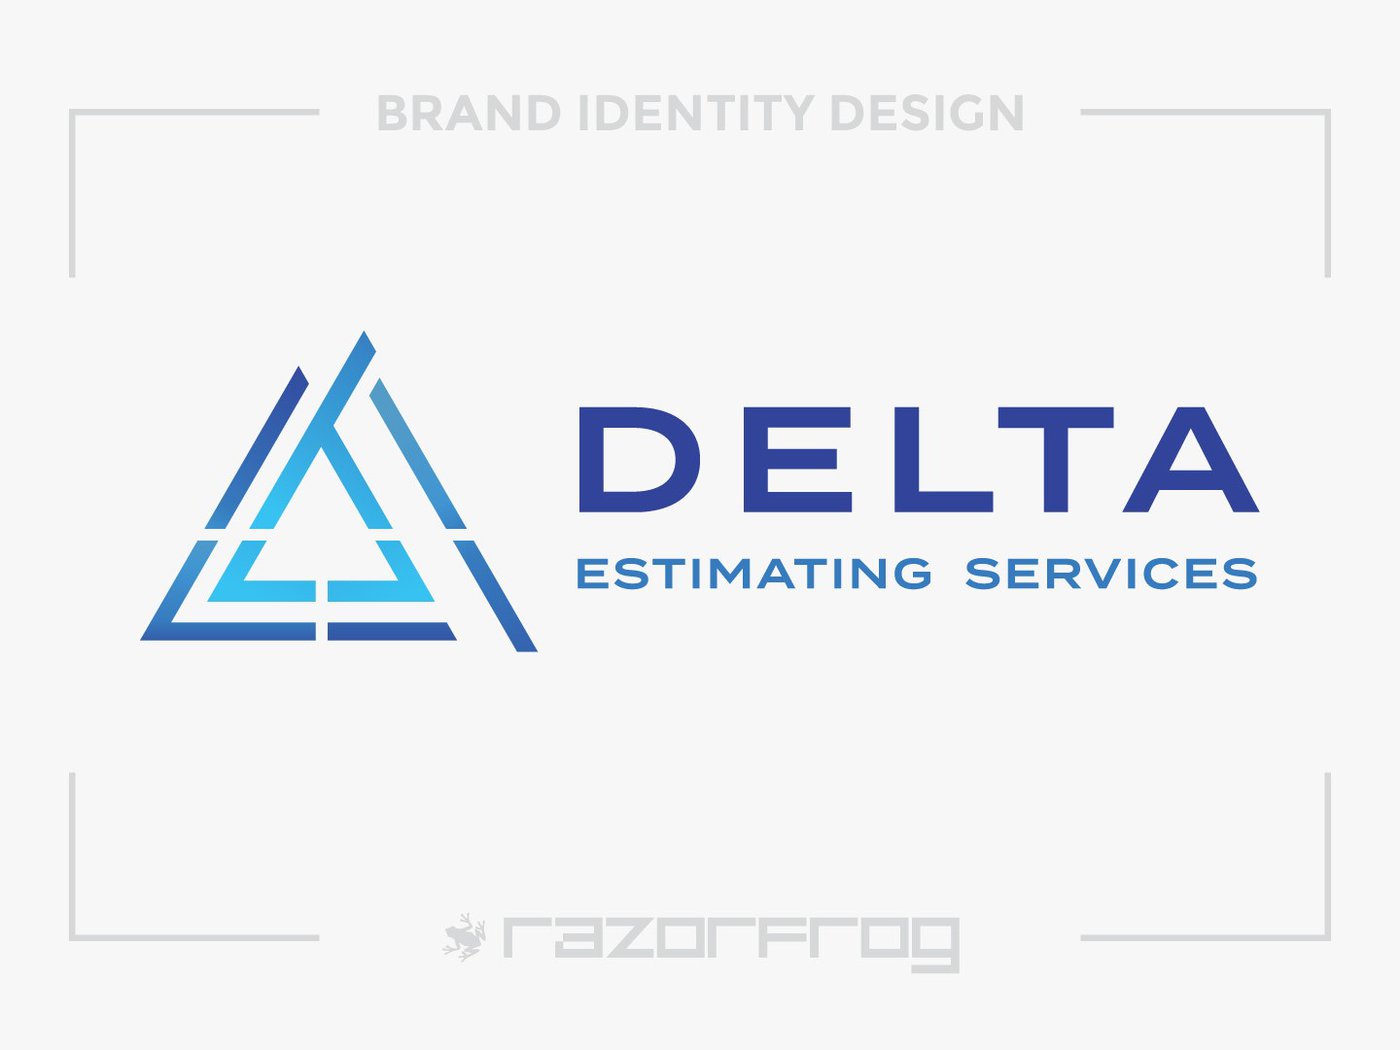 Delta Estimating Services Services Logo Design